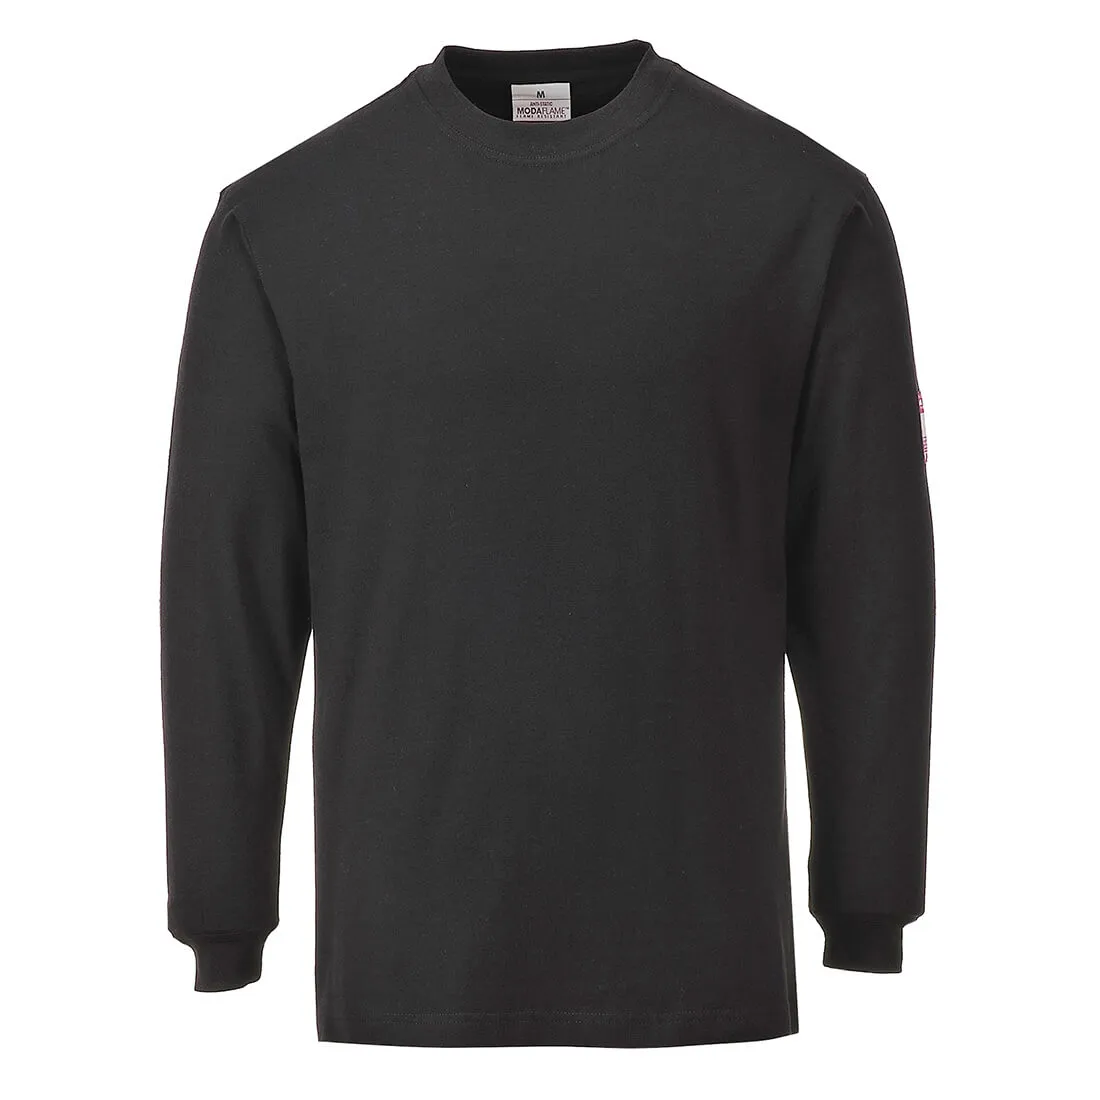 Modaflame Mens Flame Resistant Antistatic T-Shirt - Black, 2XL